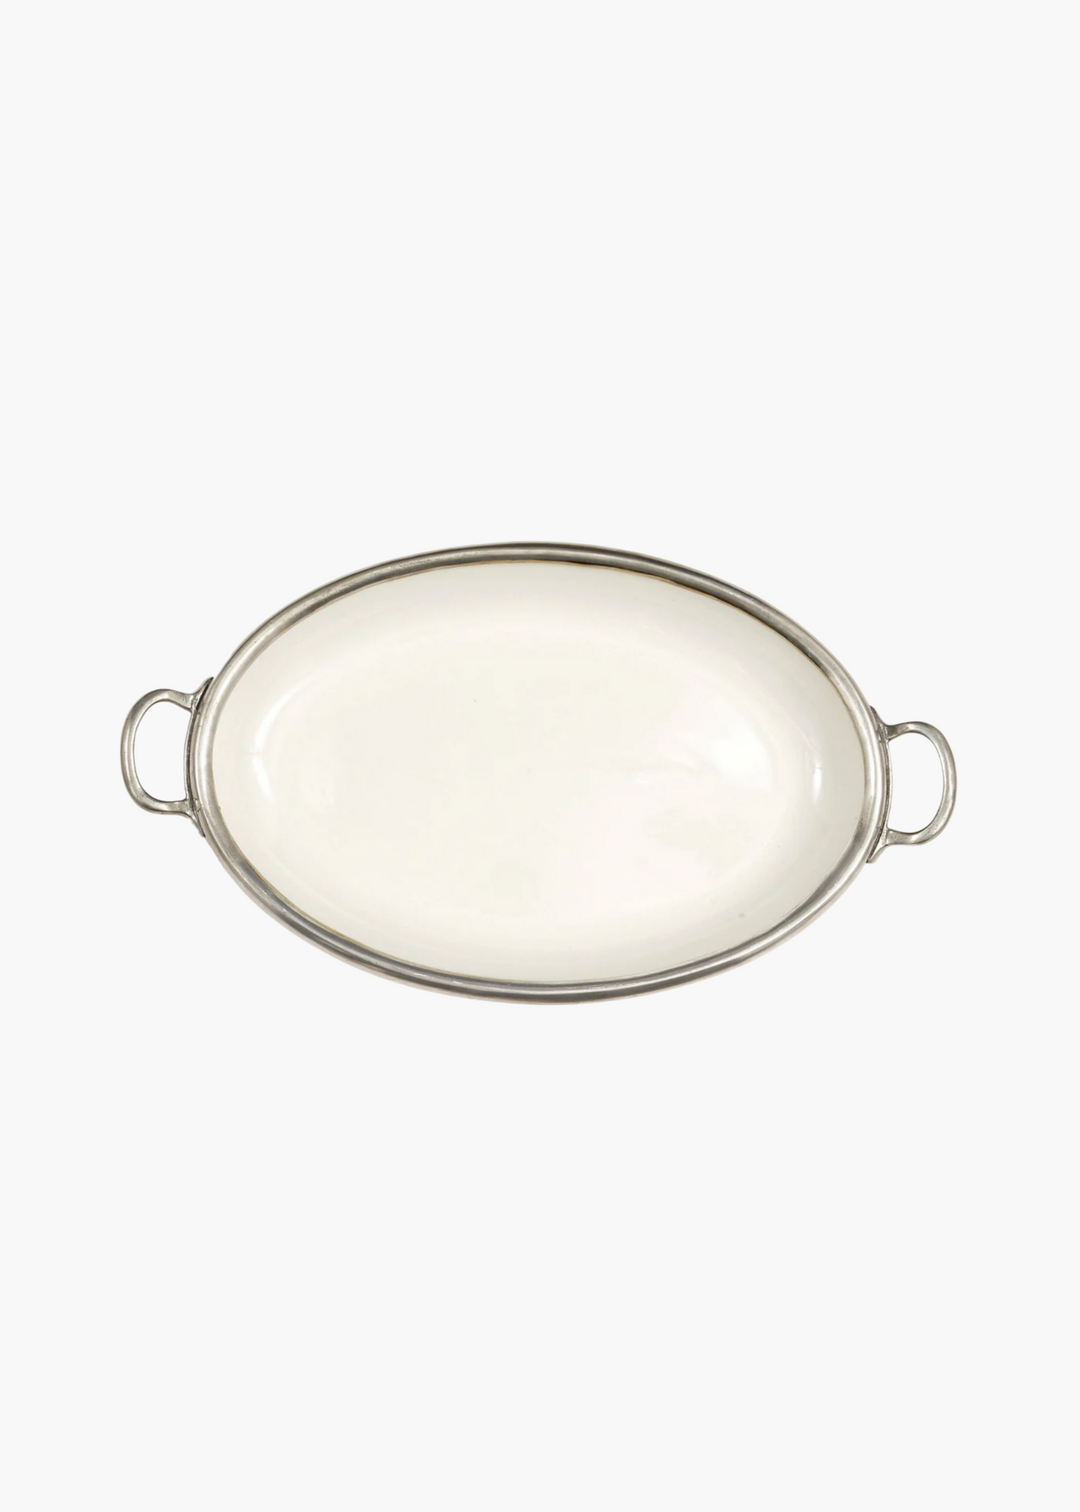 Tuscan Large Oval Platter